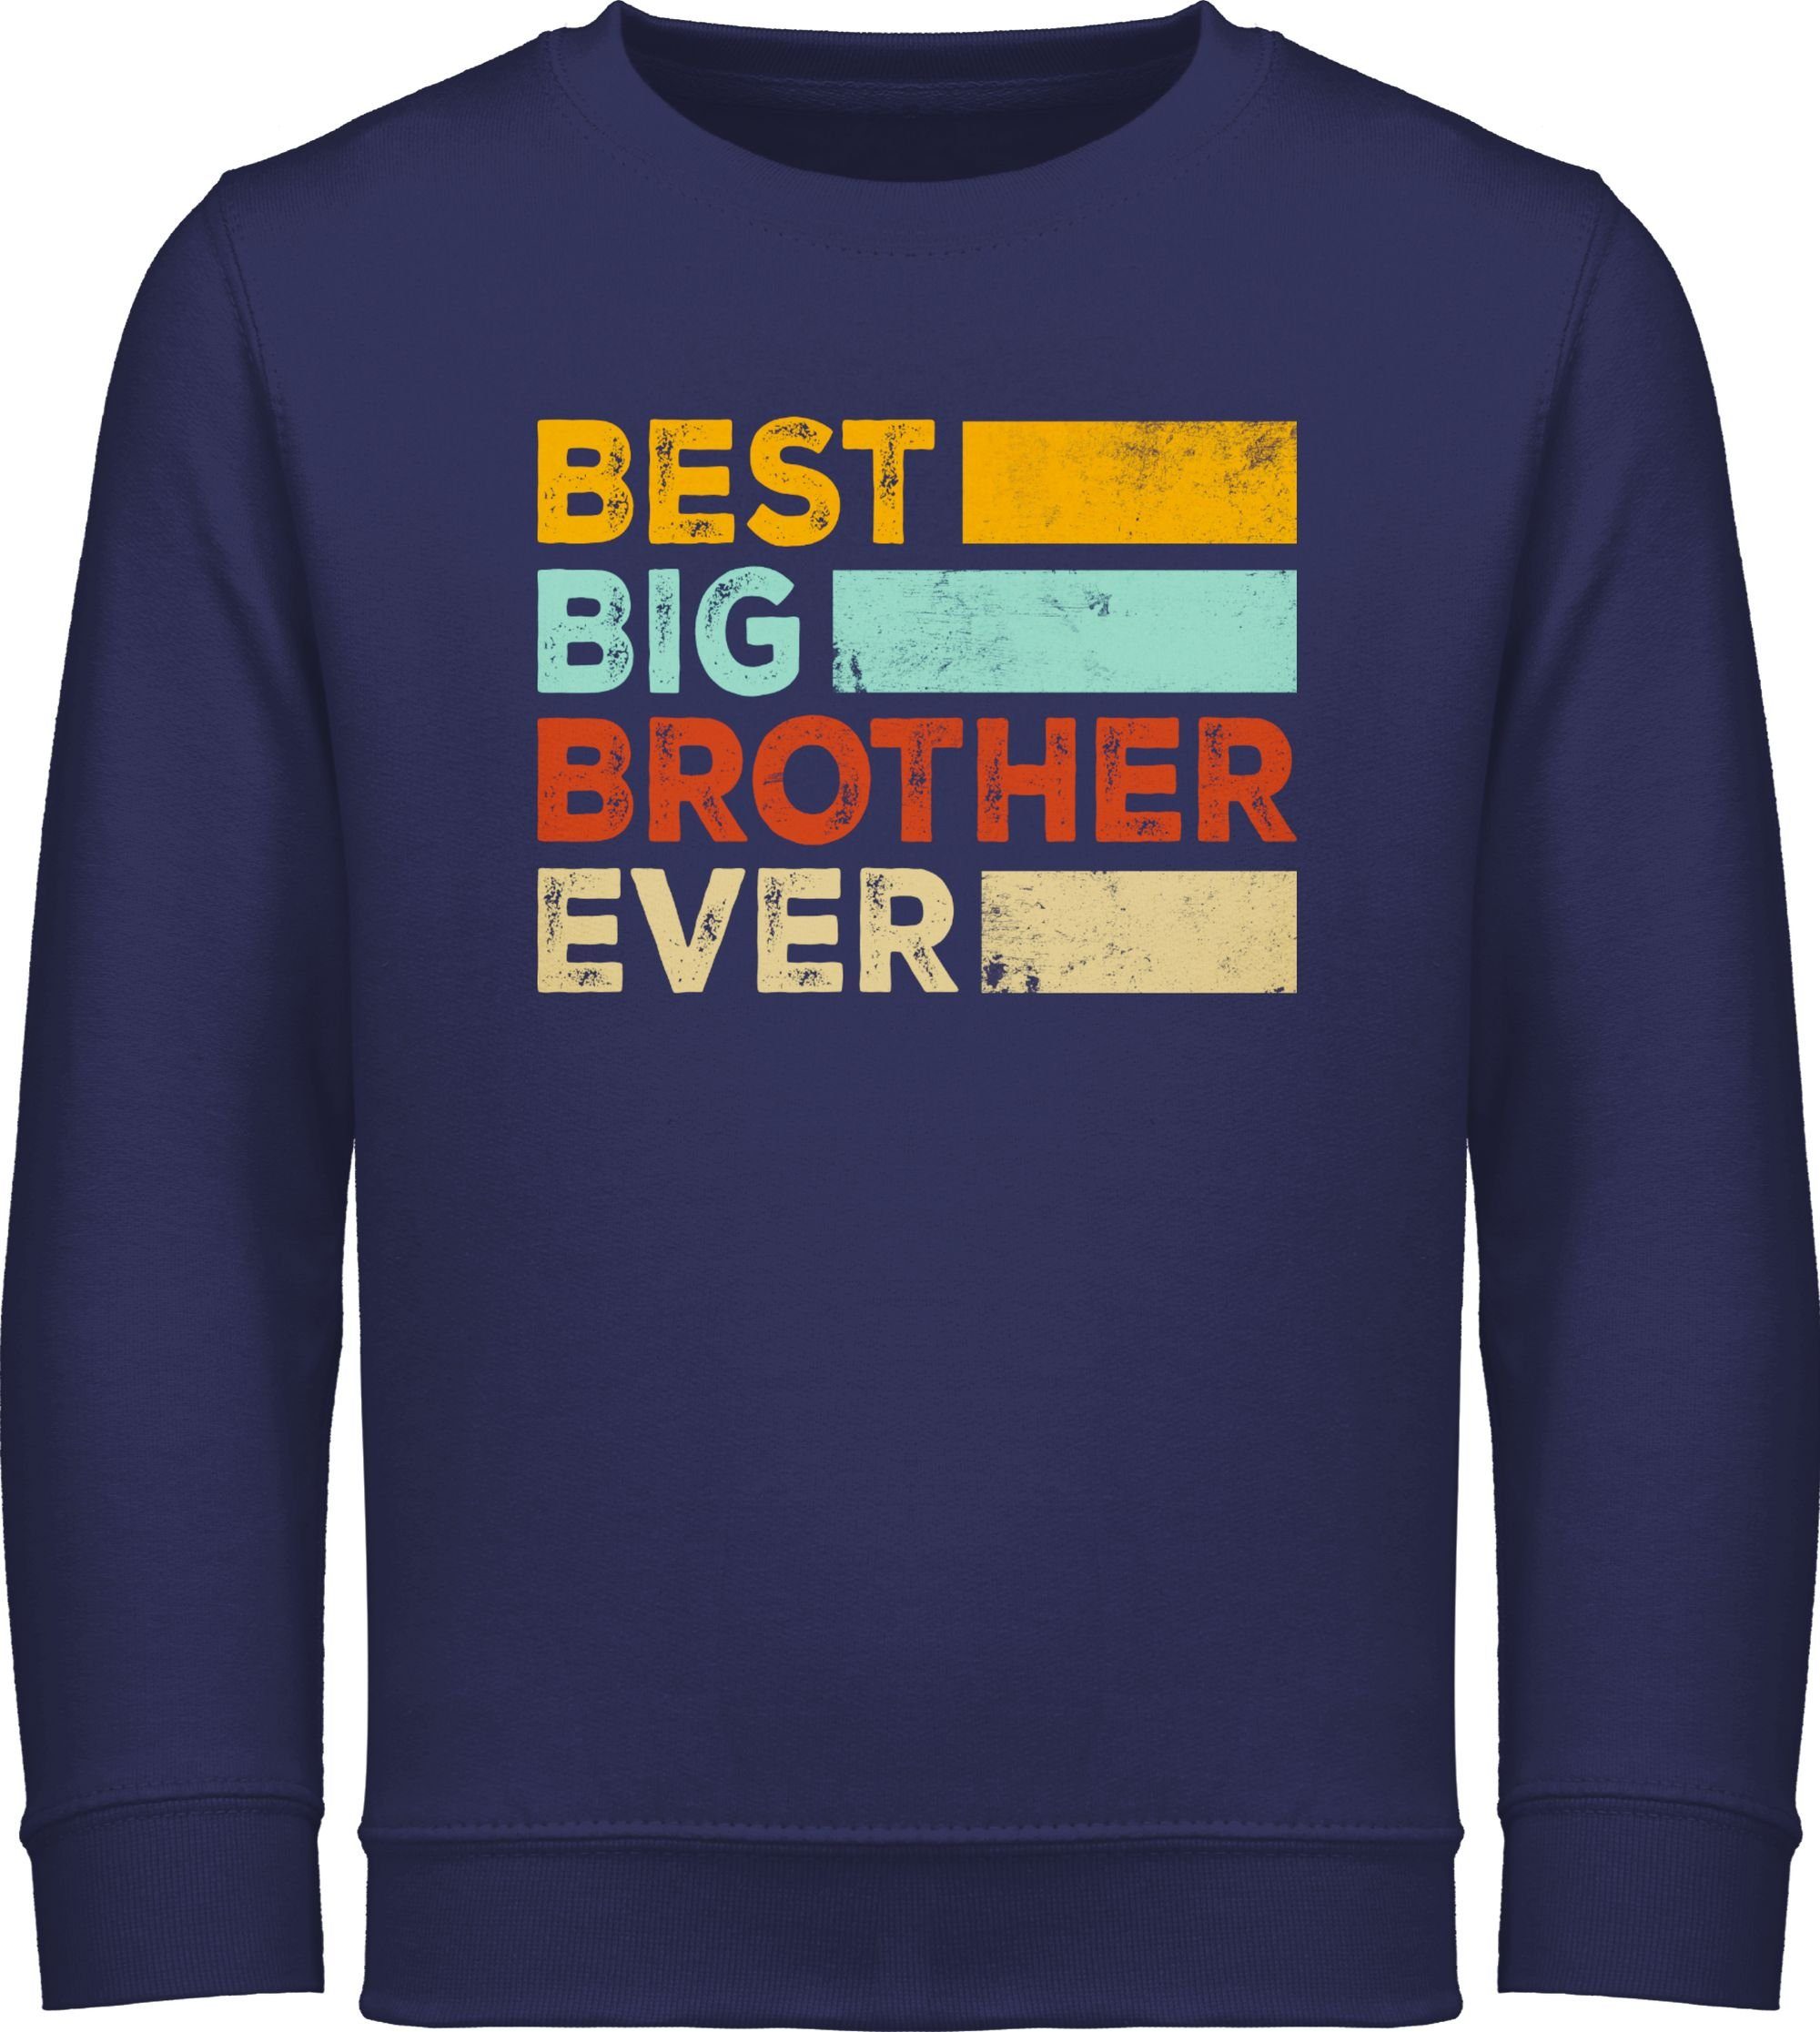 großer Geschenk Großer Zeiten Sweatshirt Bruder aller Navy Big Best 1 Shirtracer Bruder Blau Ever Bester Brother